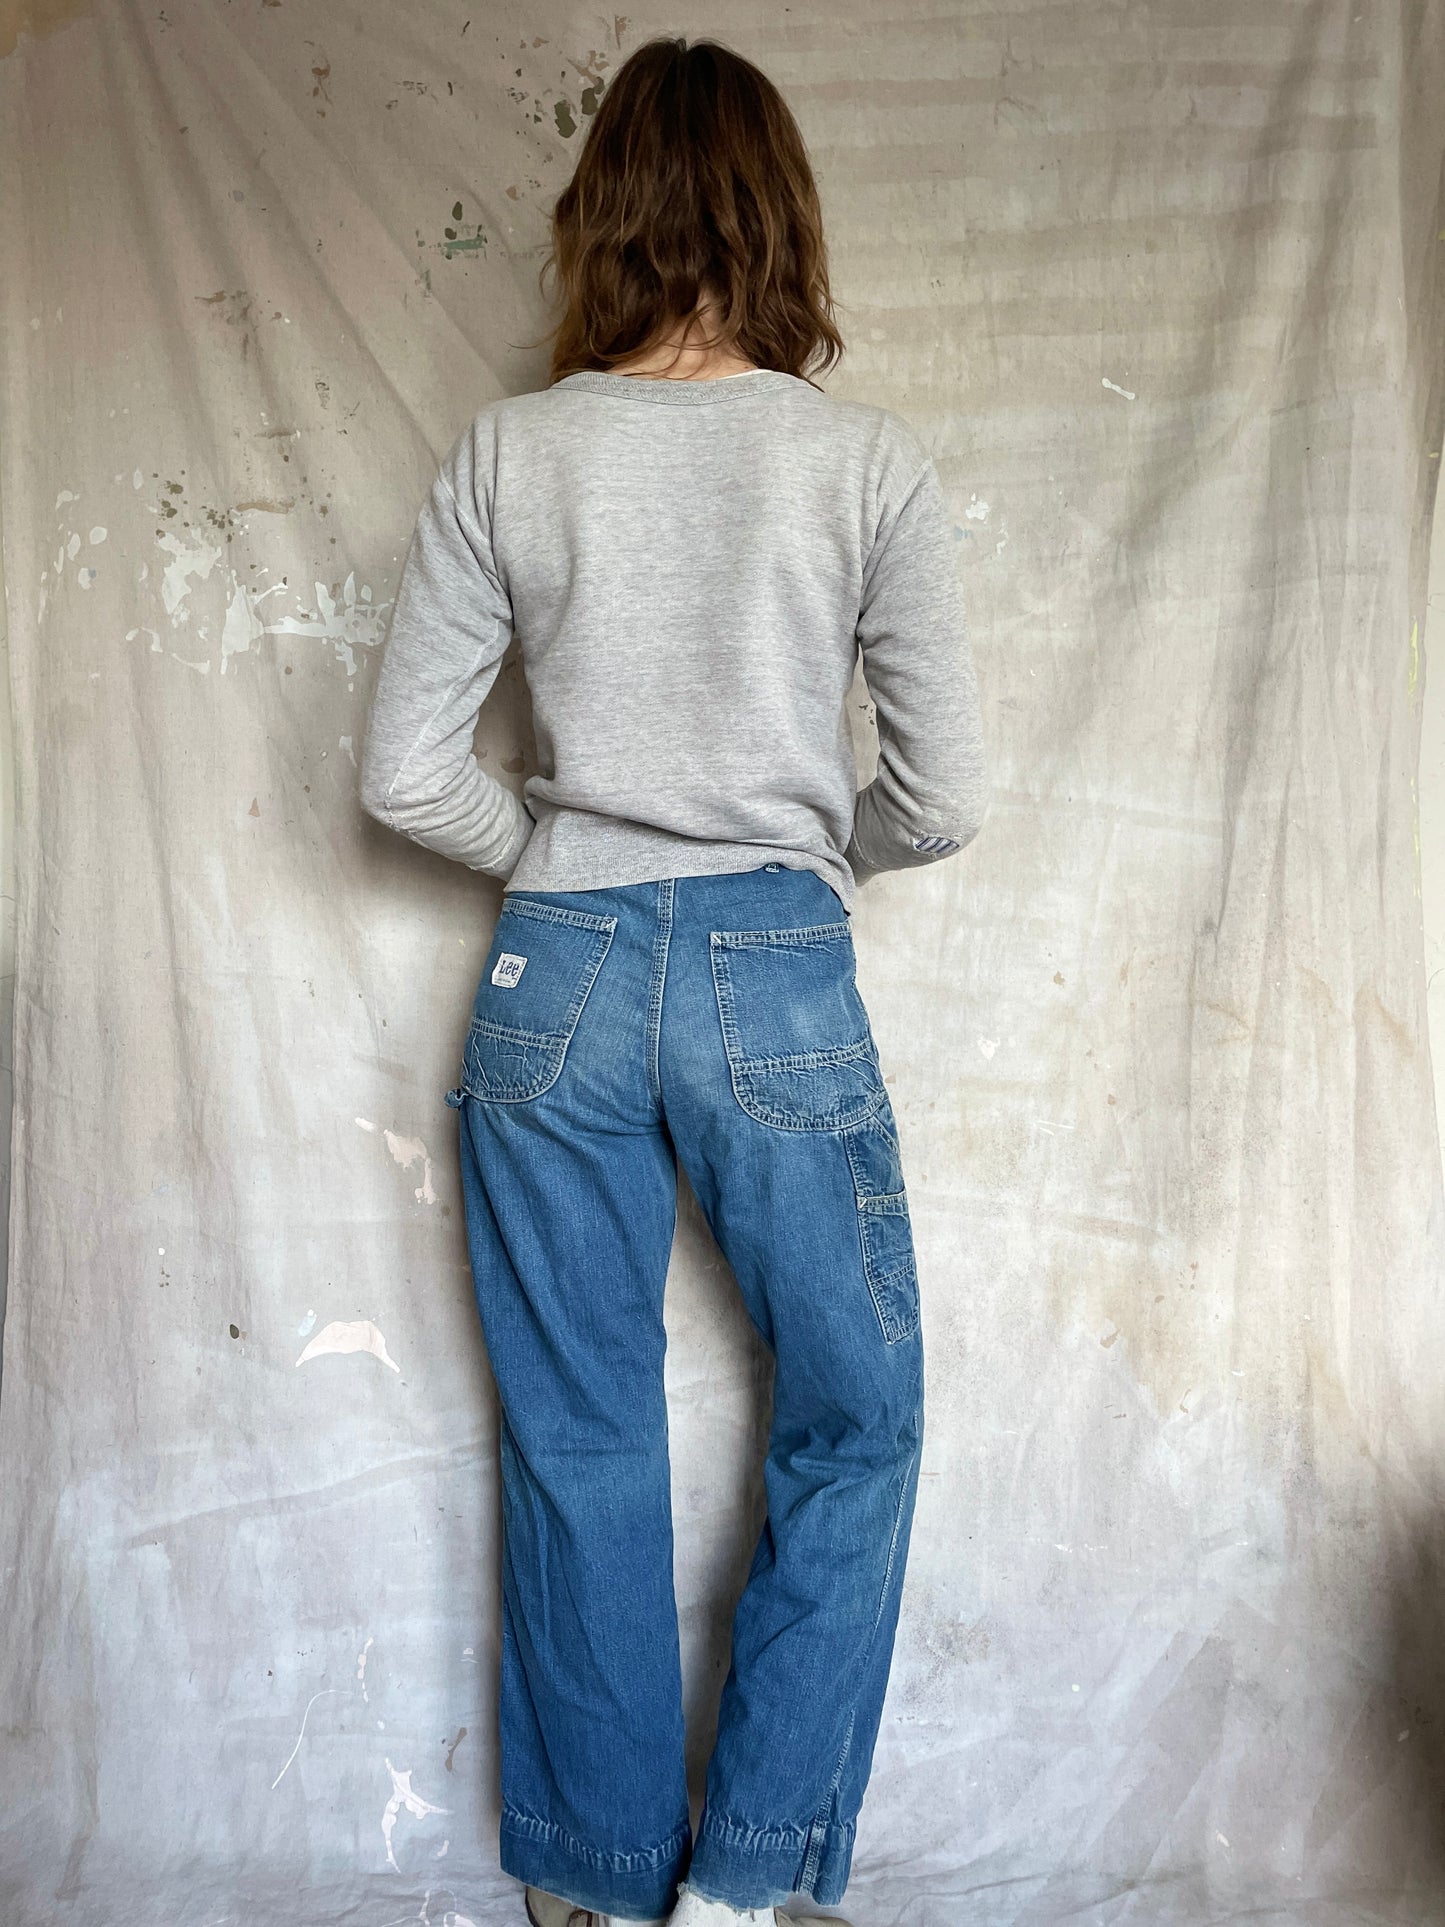 70s/80s Lee Carpenter Jeans